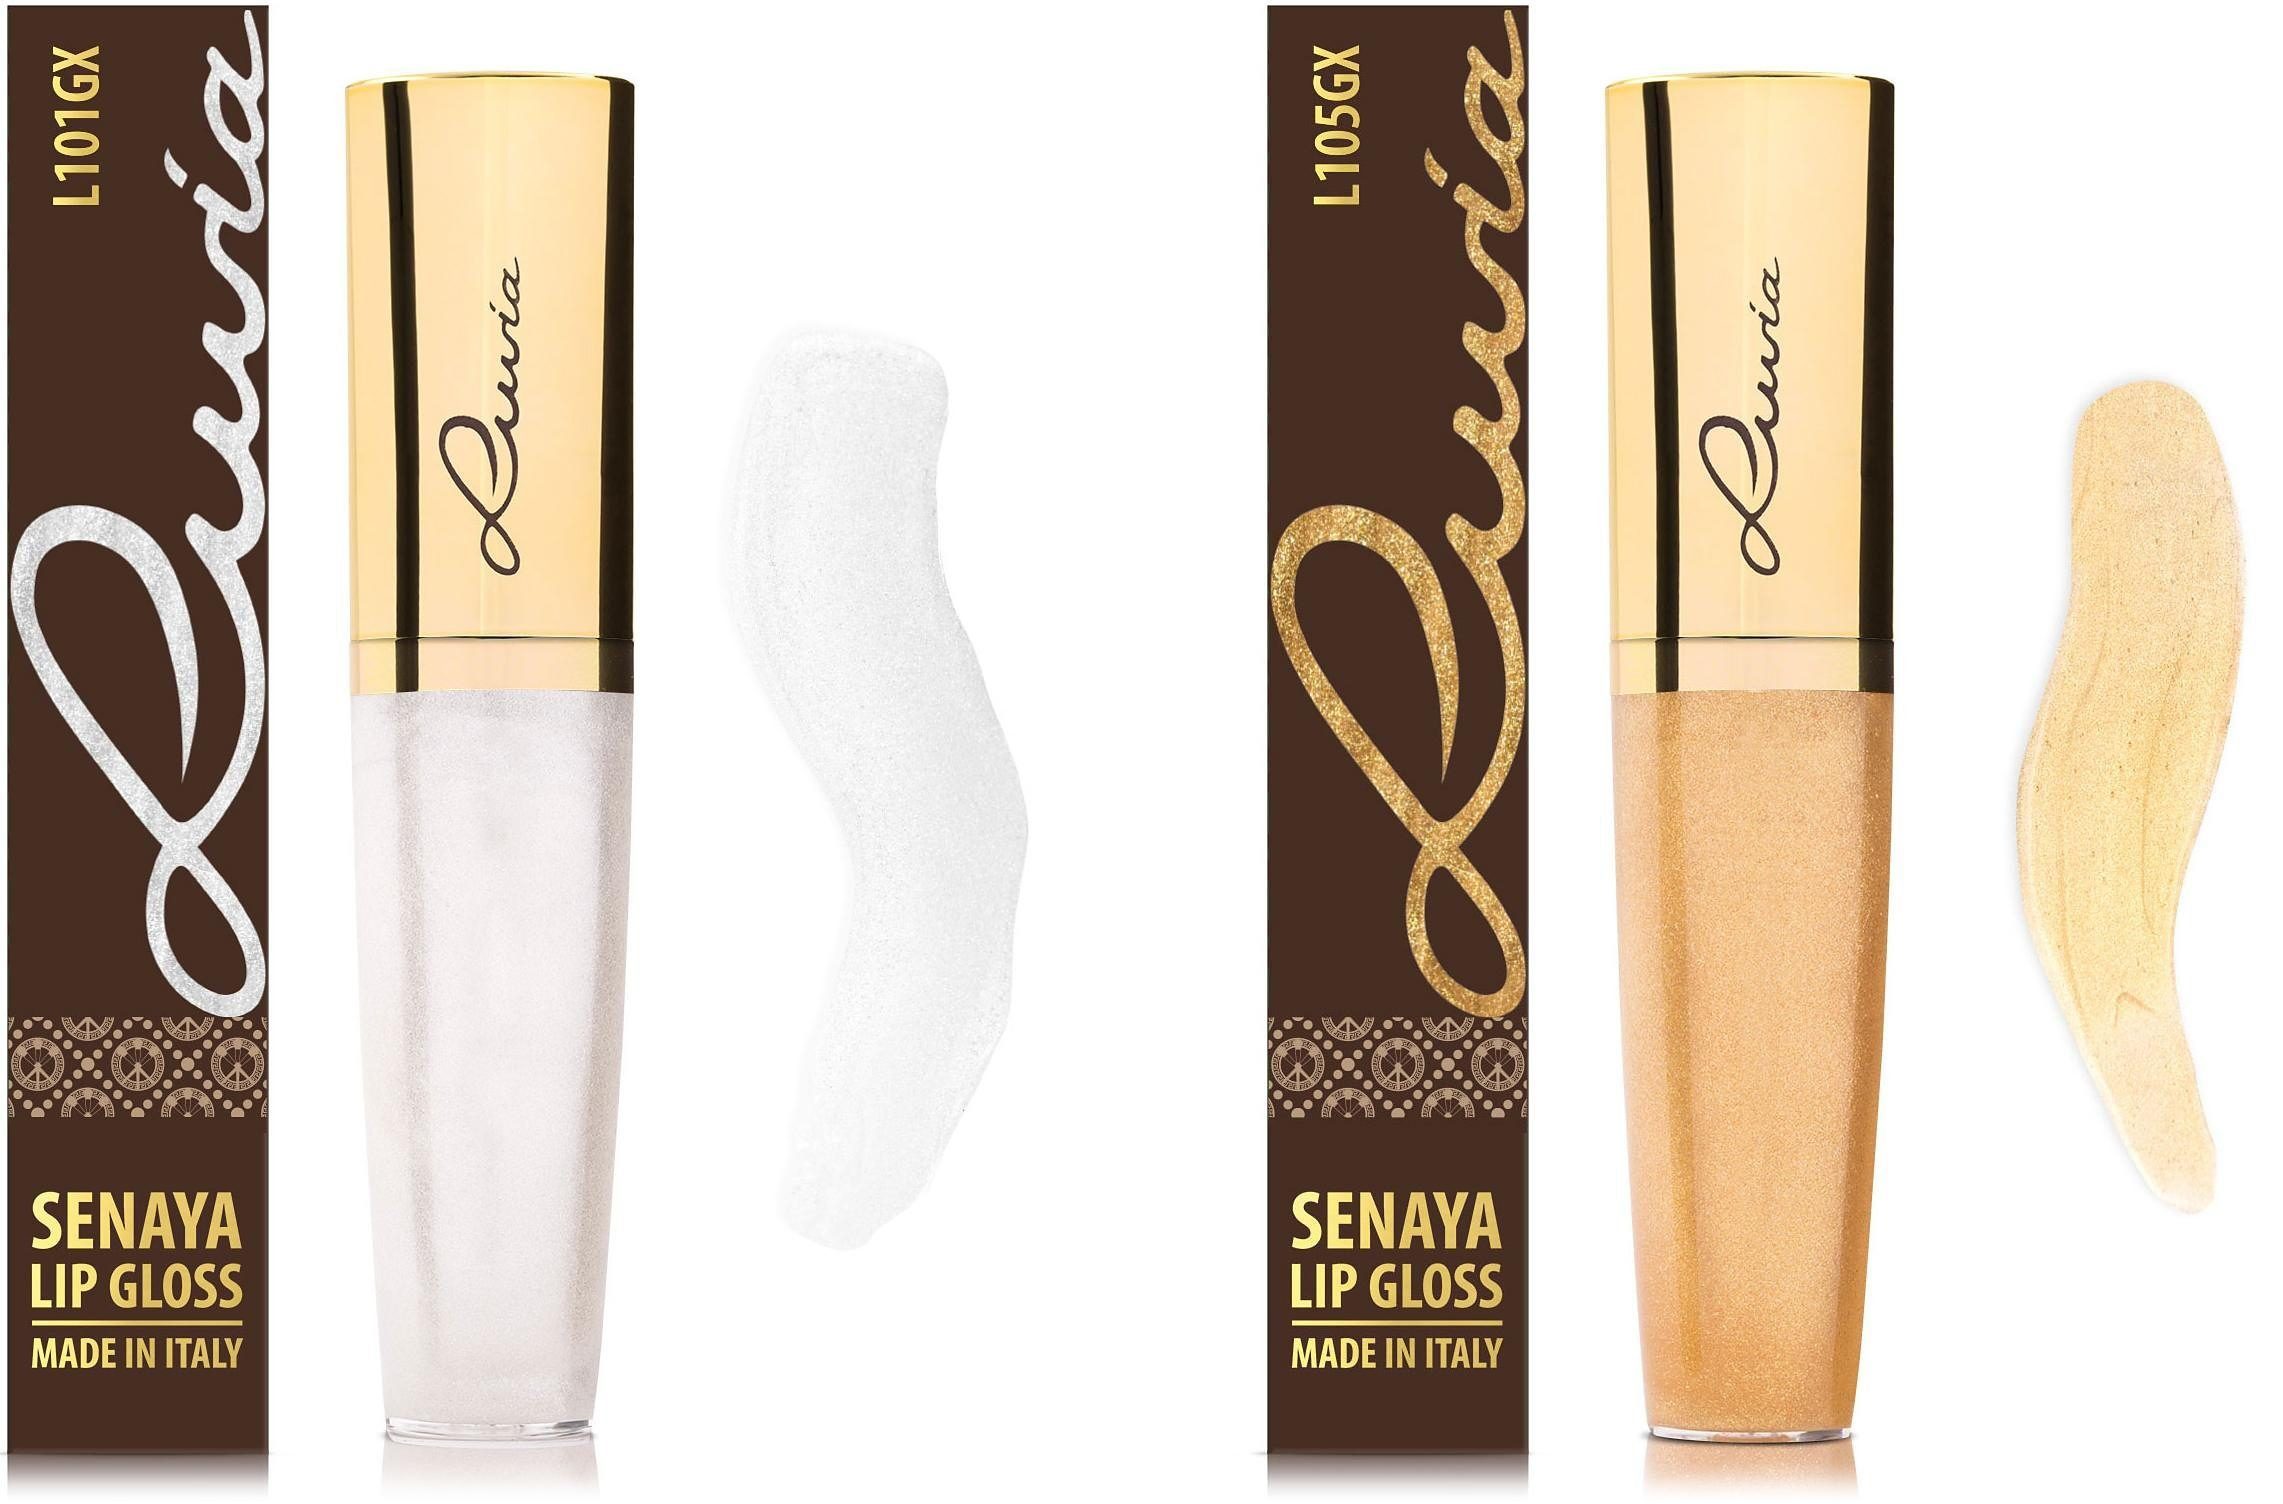 Cosmetics Luvia Colors, Lipgloss Luxurious Senaya 6-tlg.